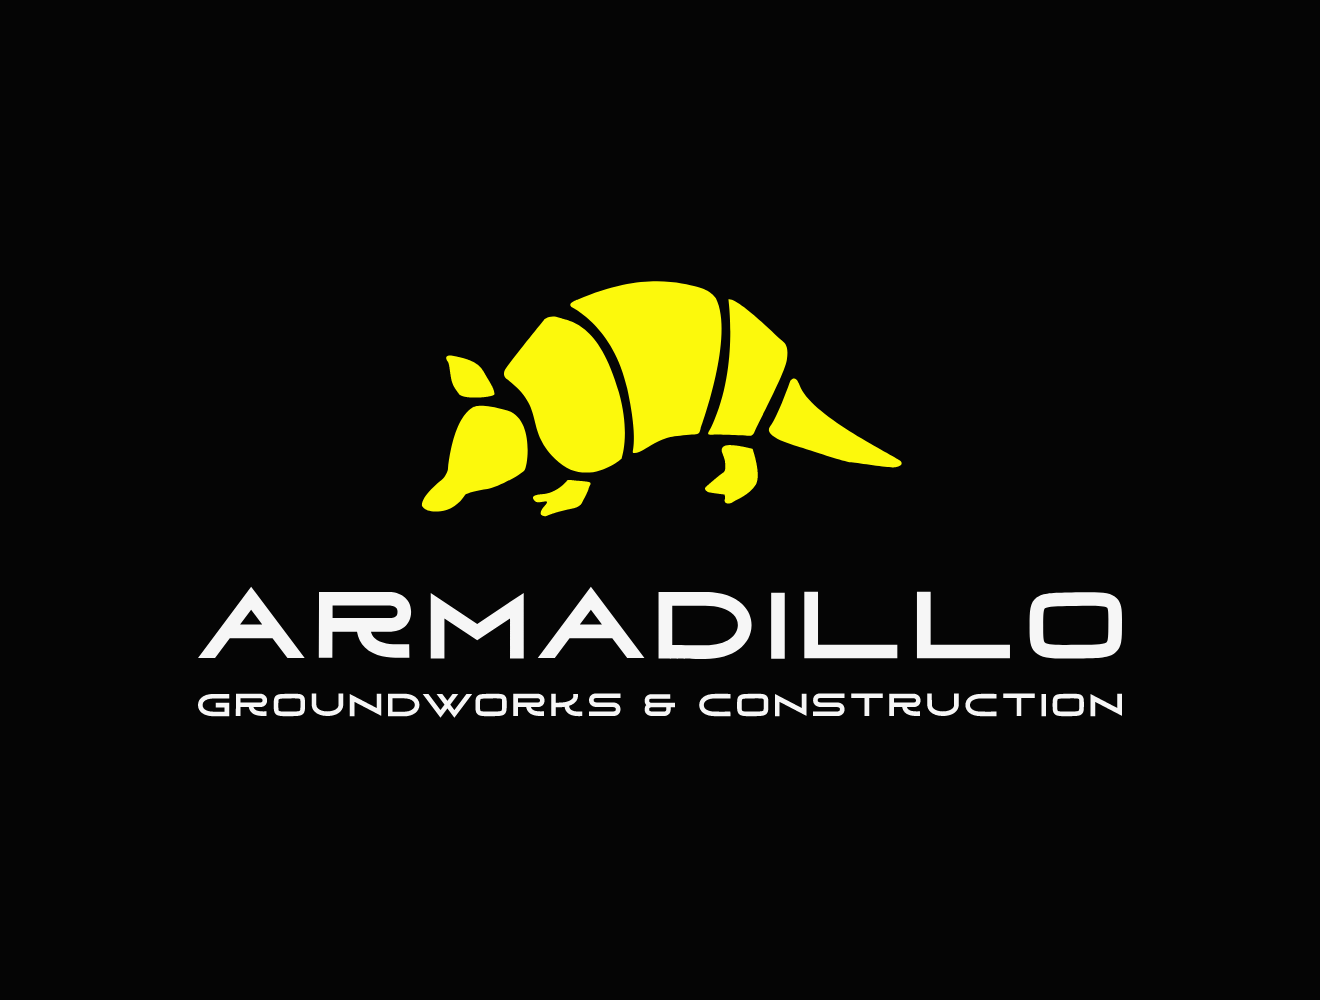 Armadillo groundworks LTD